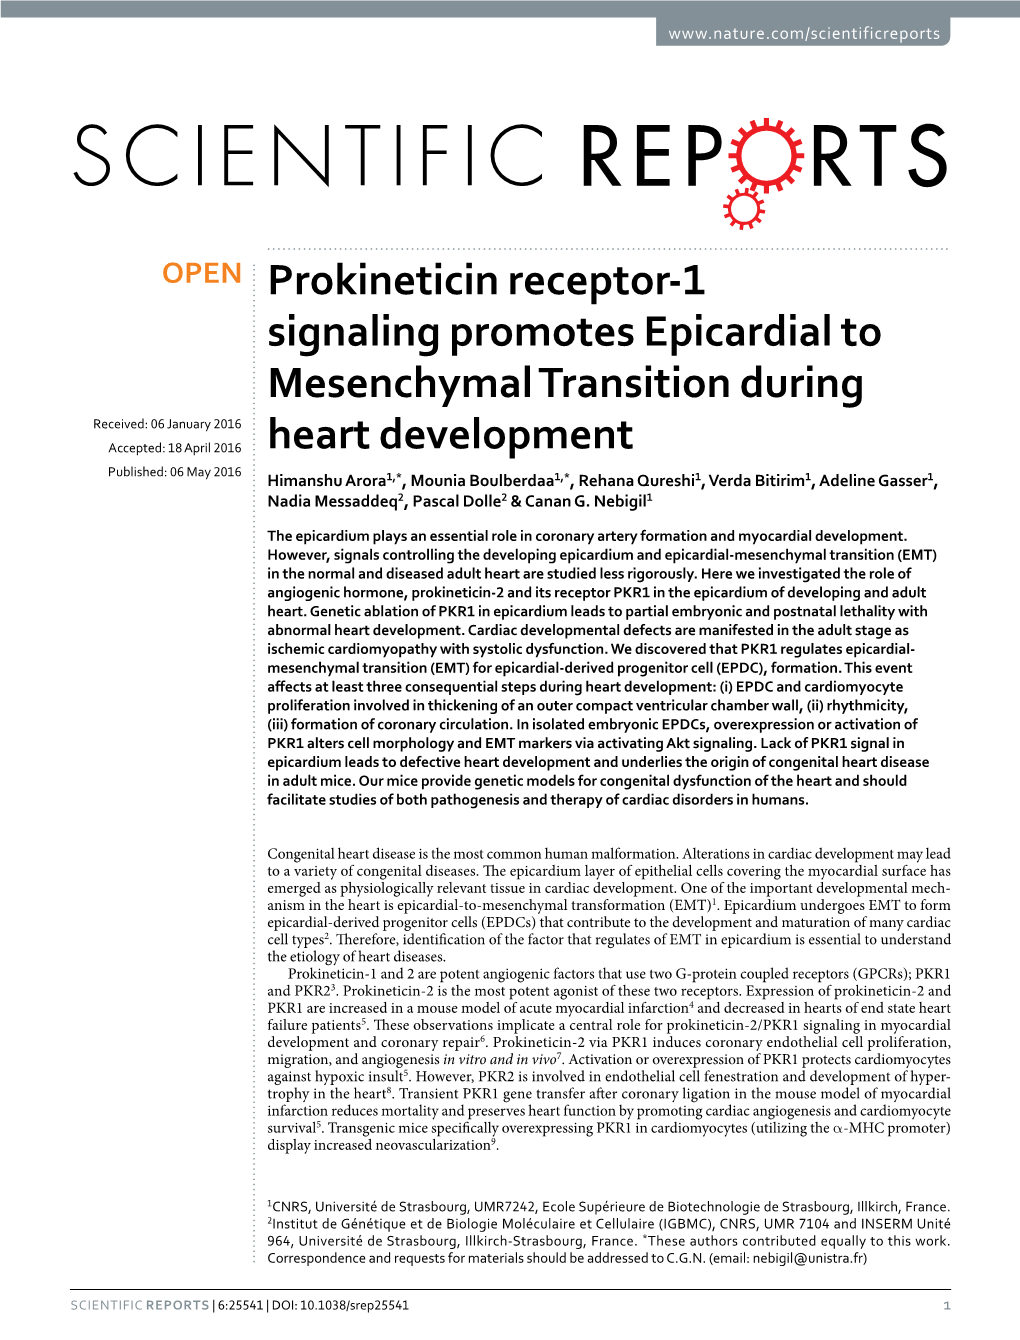 Prokineticin Receptor-1 Signaling Promotes Epicardial To